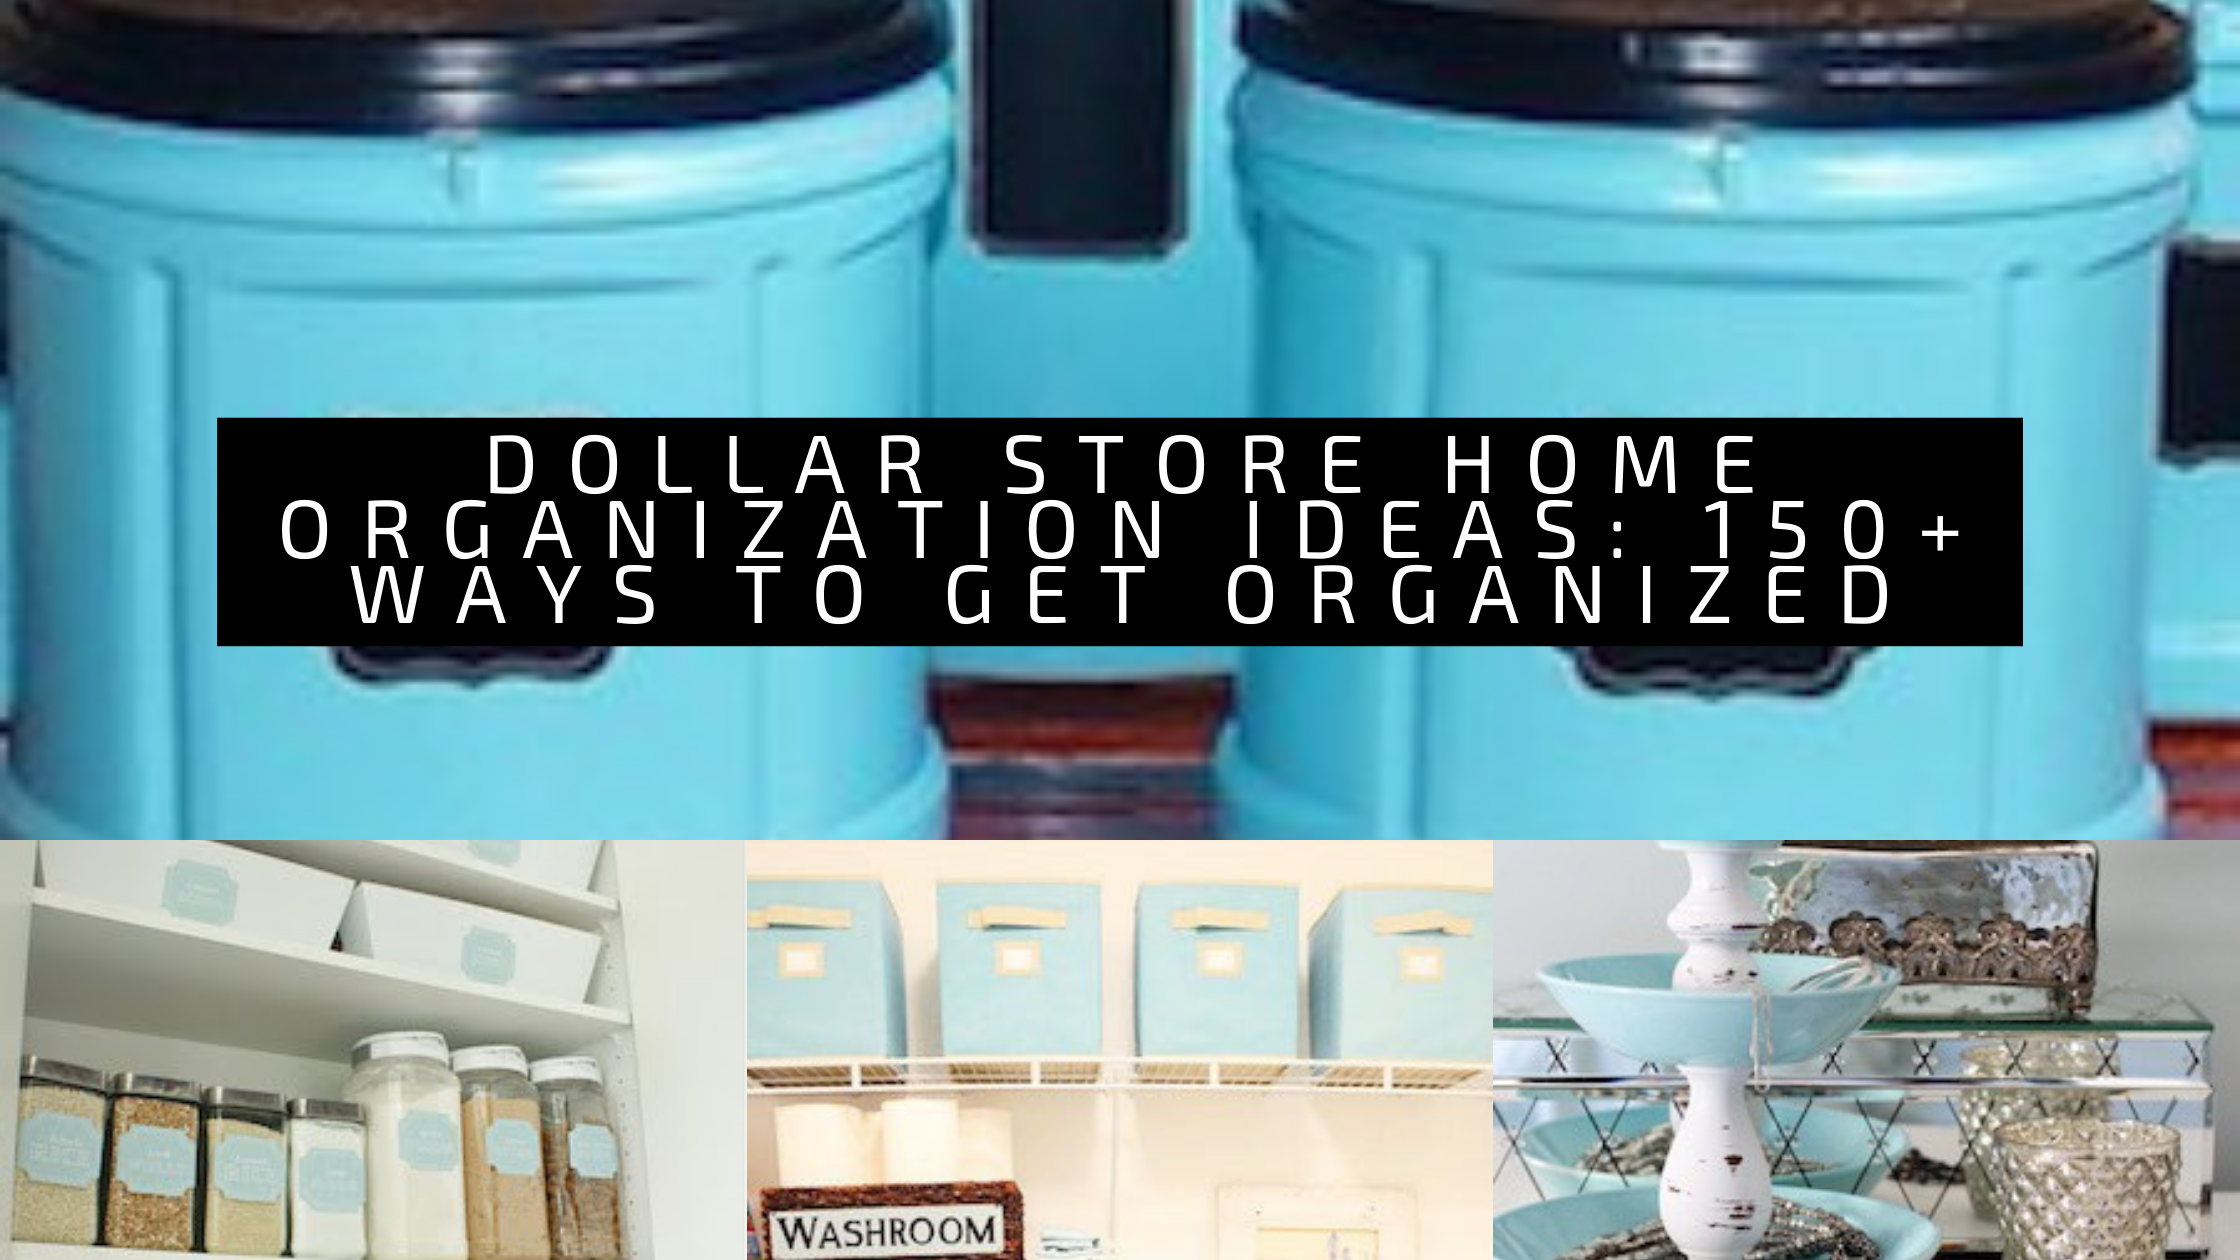 Dollar Store Home Organization Ideas: 150+ Ways to Get Organized 3